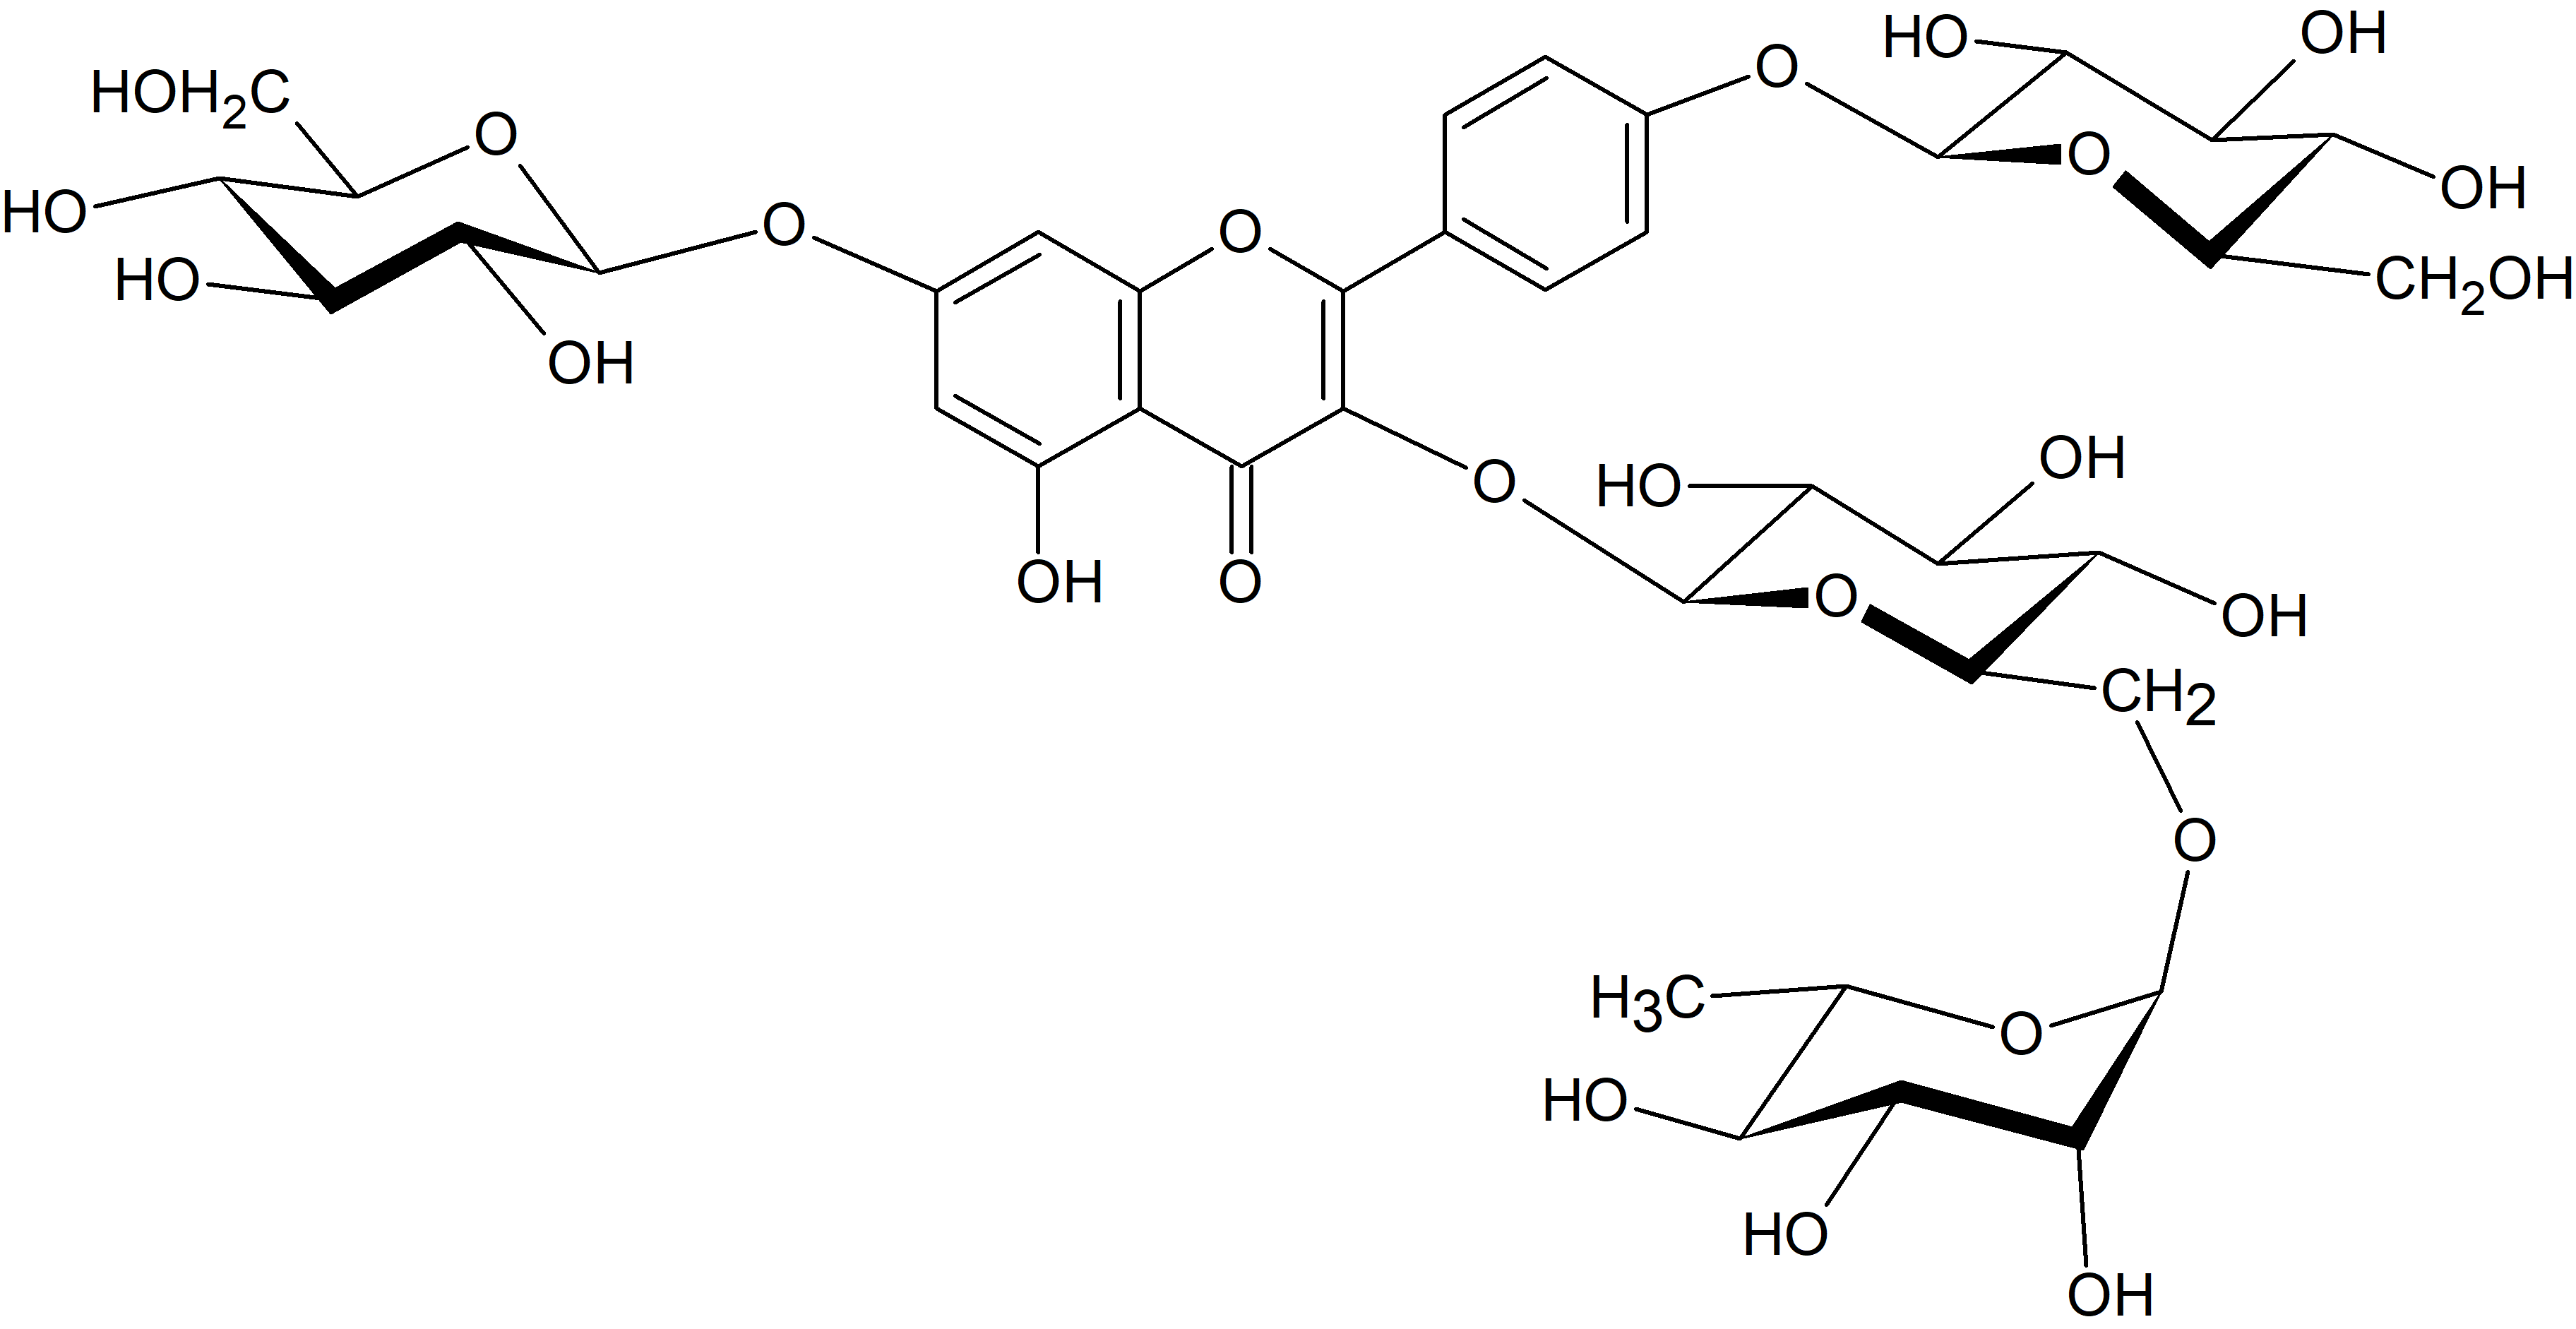 Kaempferol 3-rutinoside-7,4'-di-O-glucoside